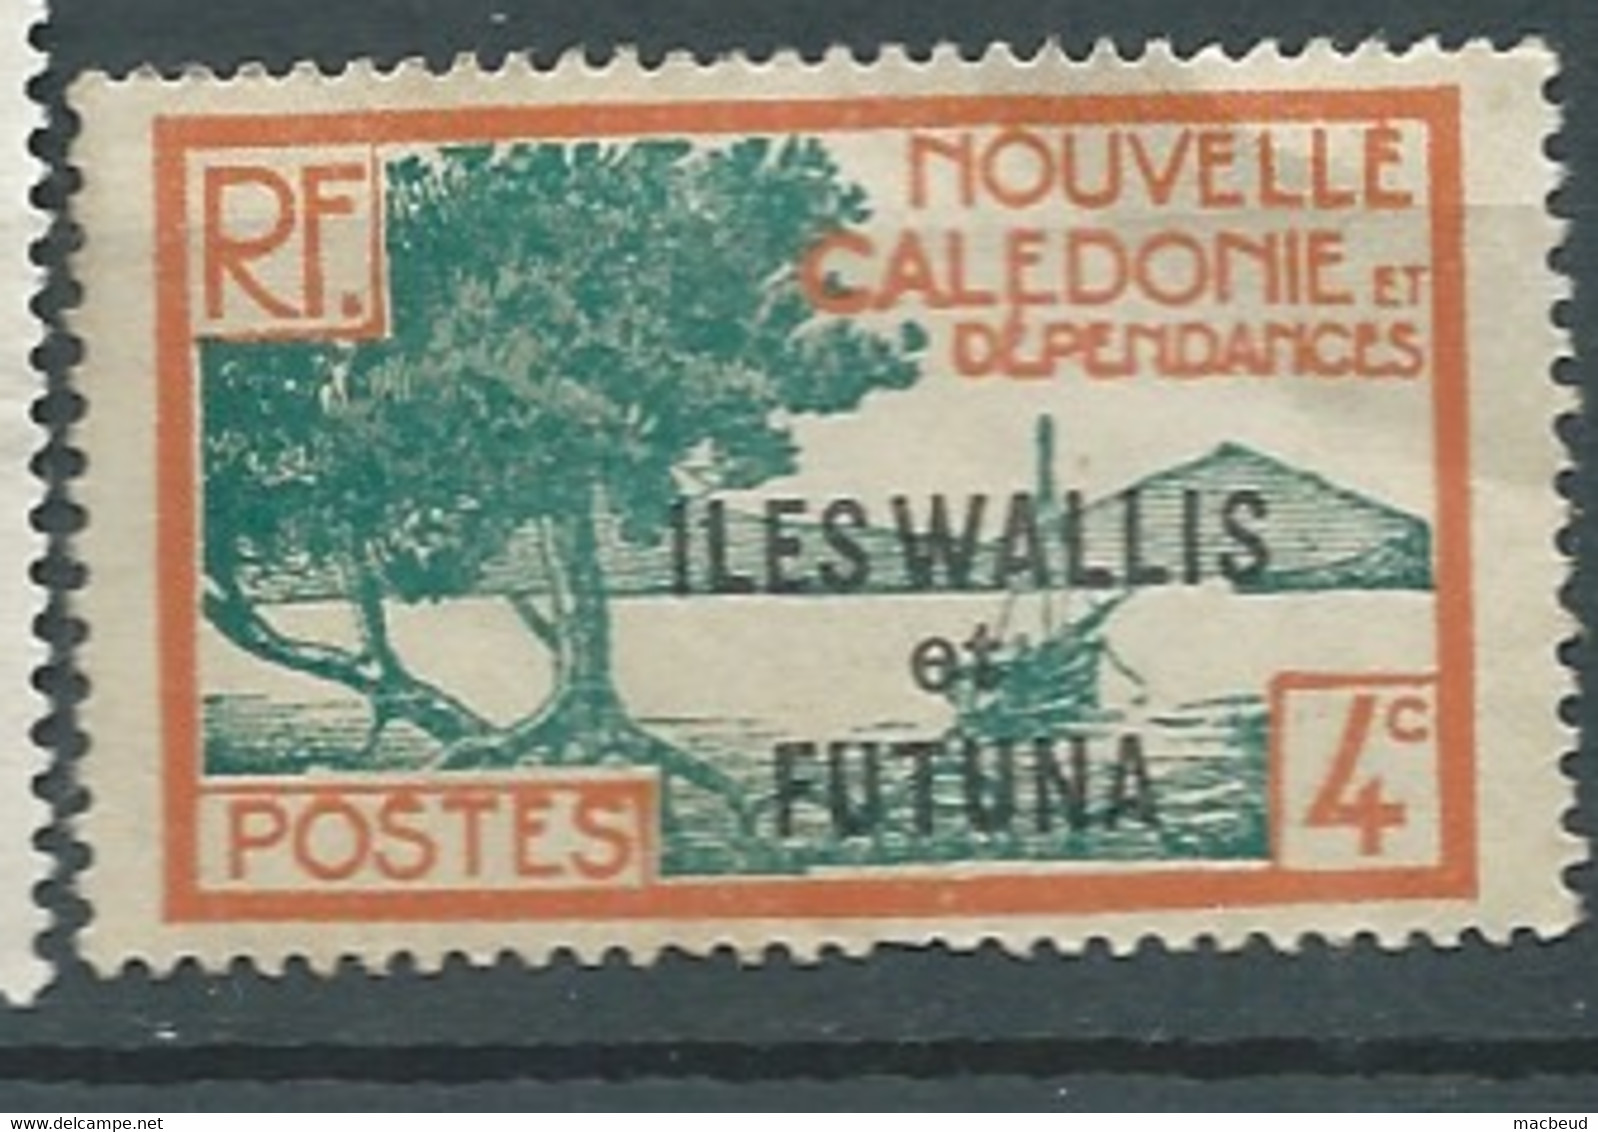 Wallis Et Futuna  - Yvert N°   45 (*)      -  Abc 31116 - Unused Stamps